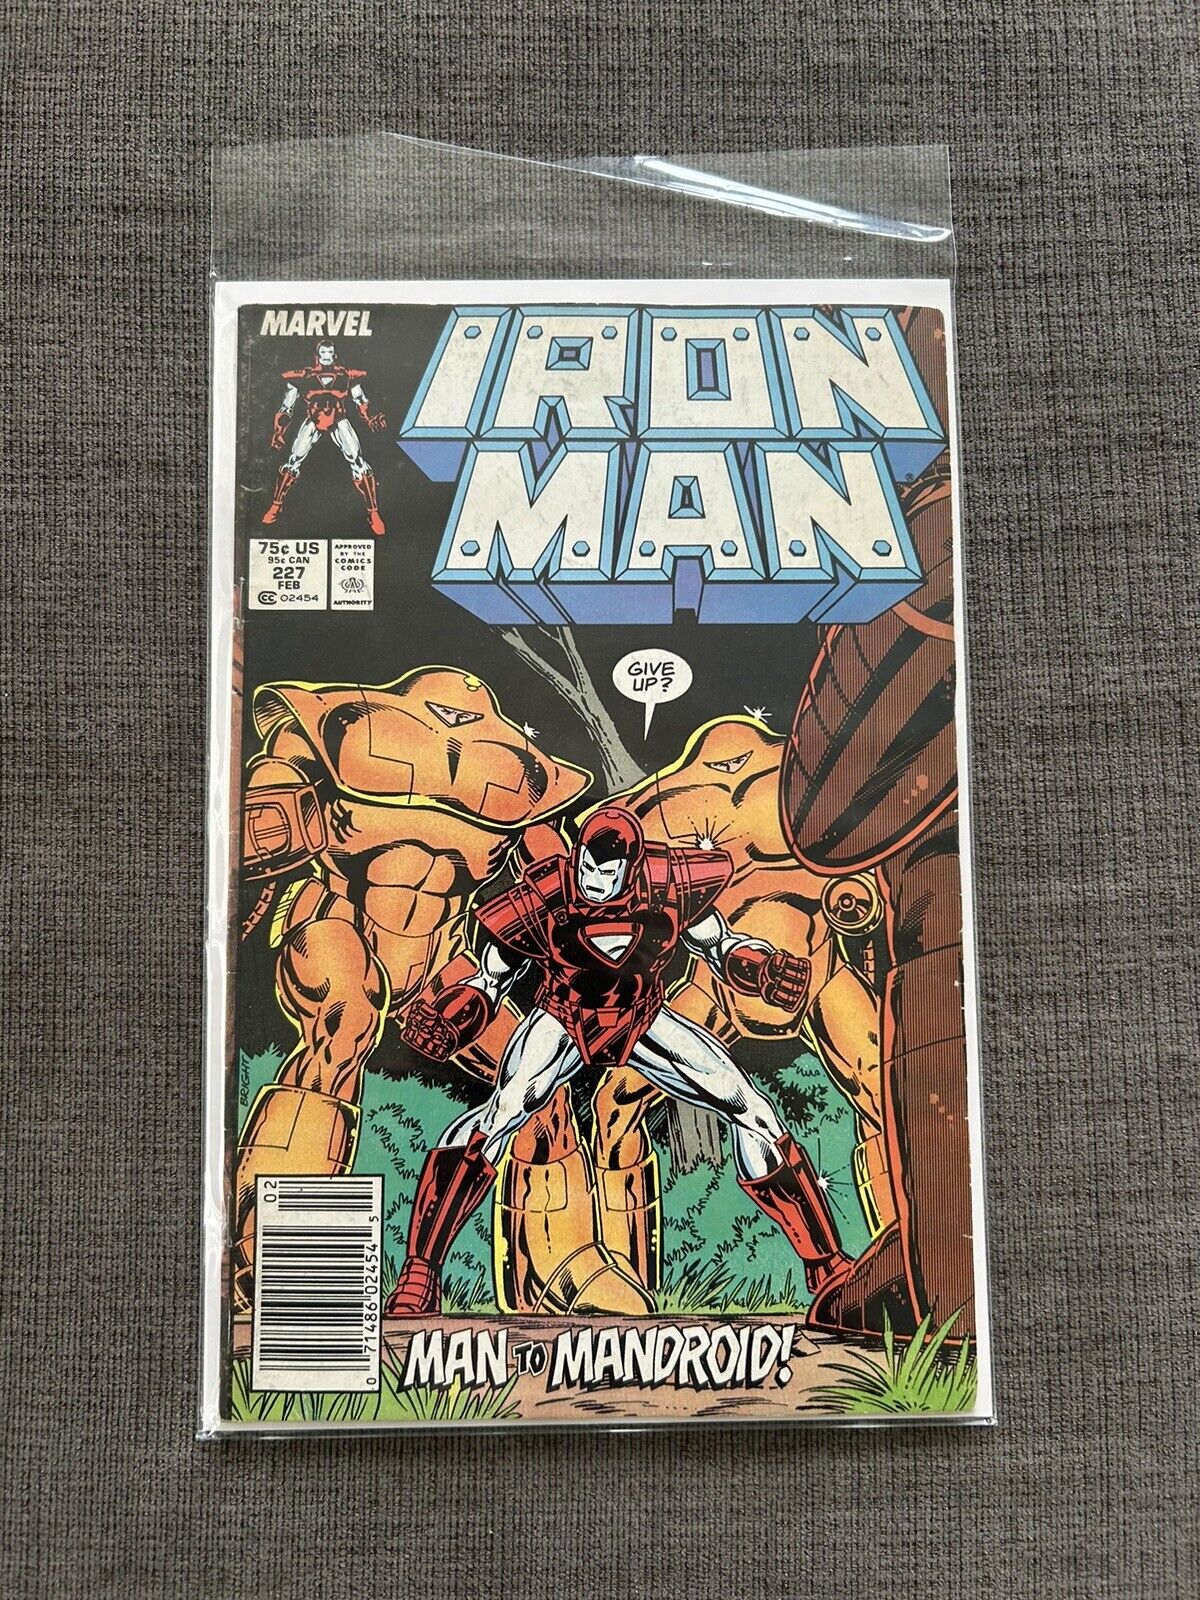 Iron Man #227 - Man to Mandroid - Marvel - 1988